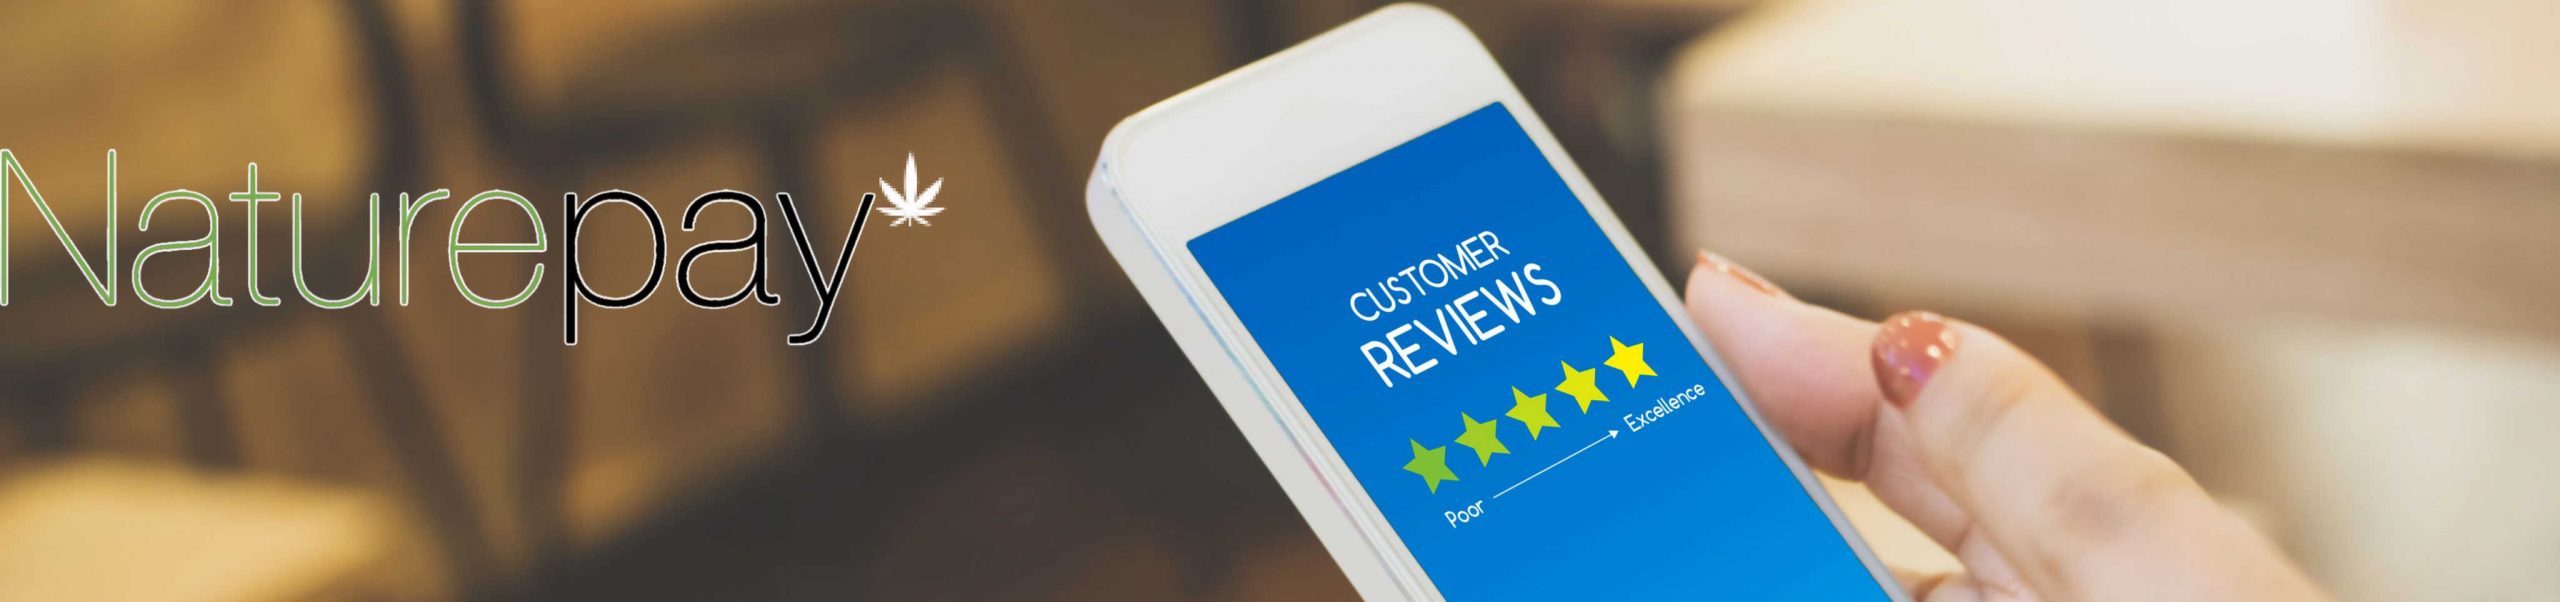 image of naturepay customer reviews